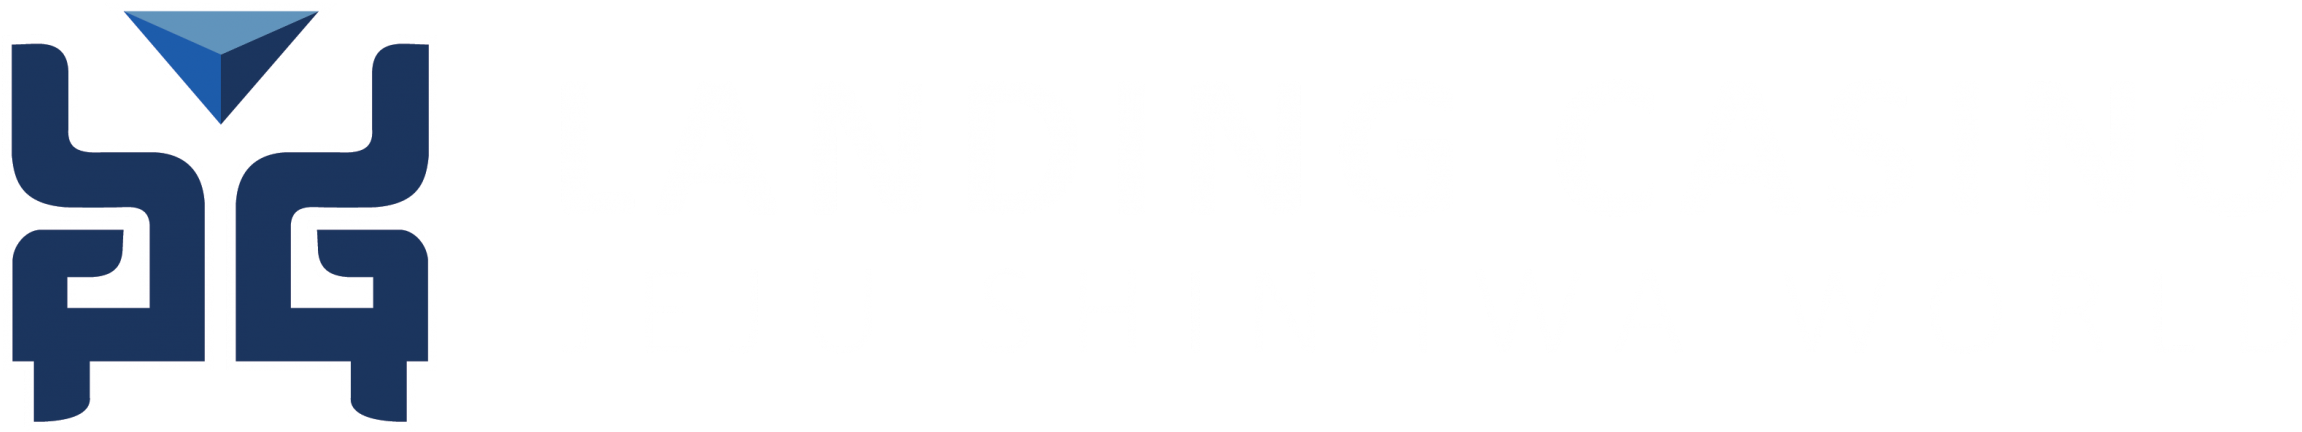 Landing Casino Jeju Shinhwa World Logo PNG